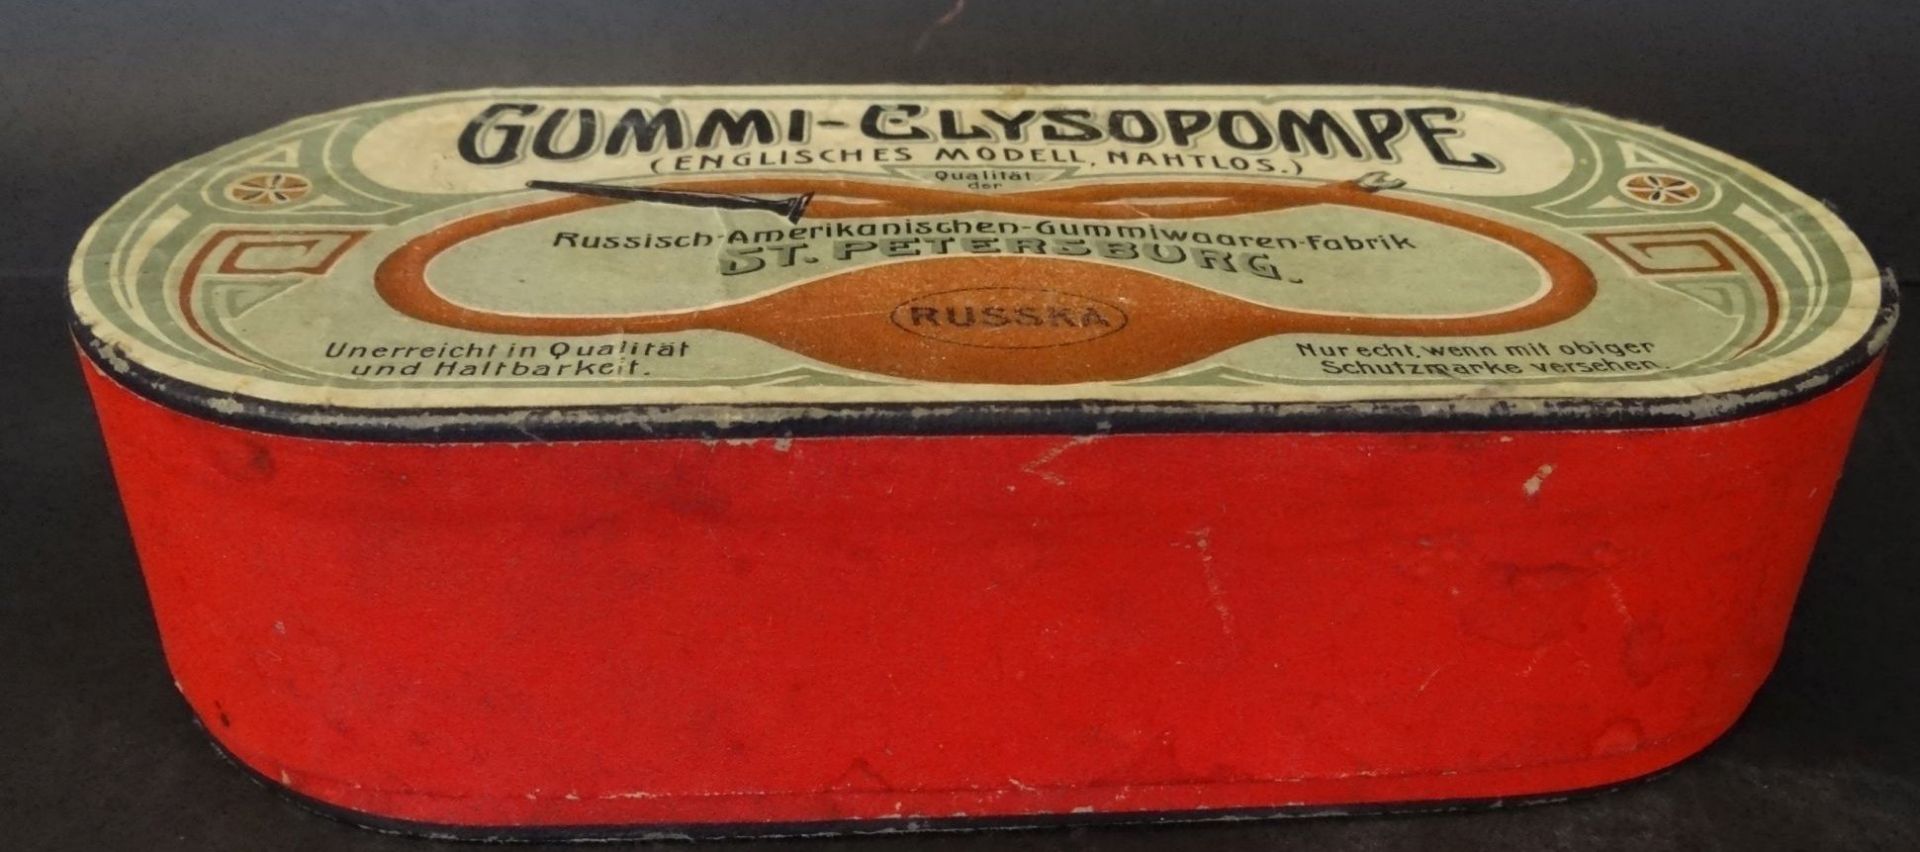 Gummi Glysopompe in Jugendstil-Spanholschachtel, H-6 cm, 20x9 cm - Bild 2 aus 5